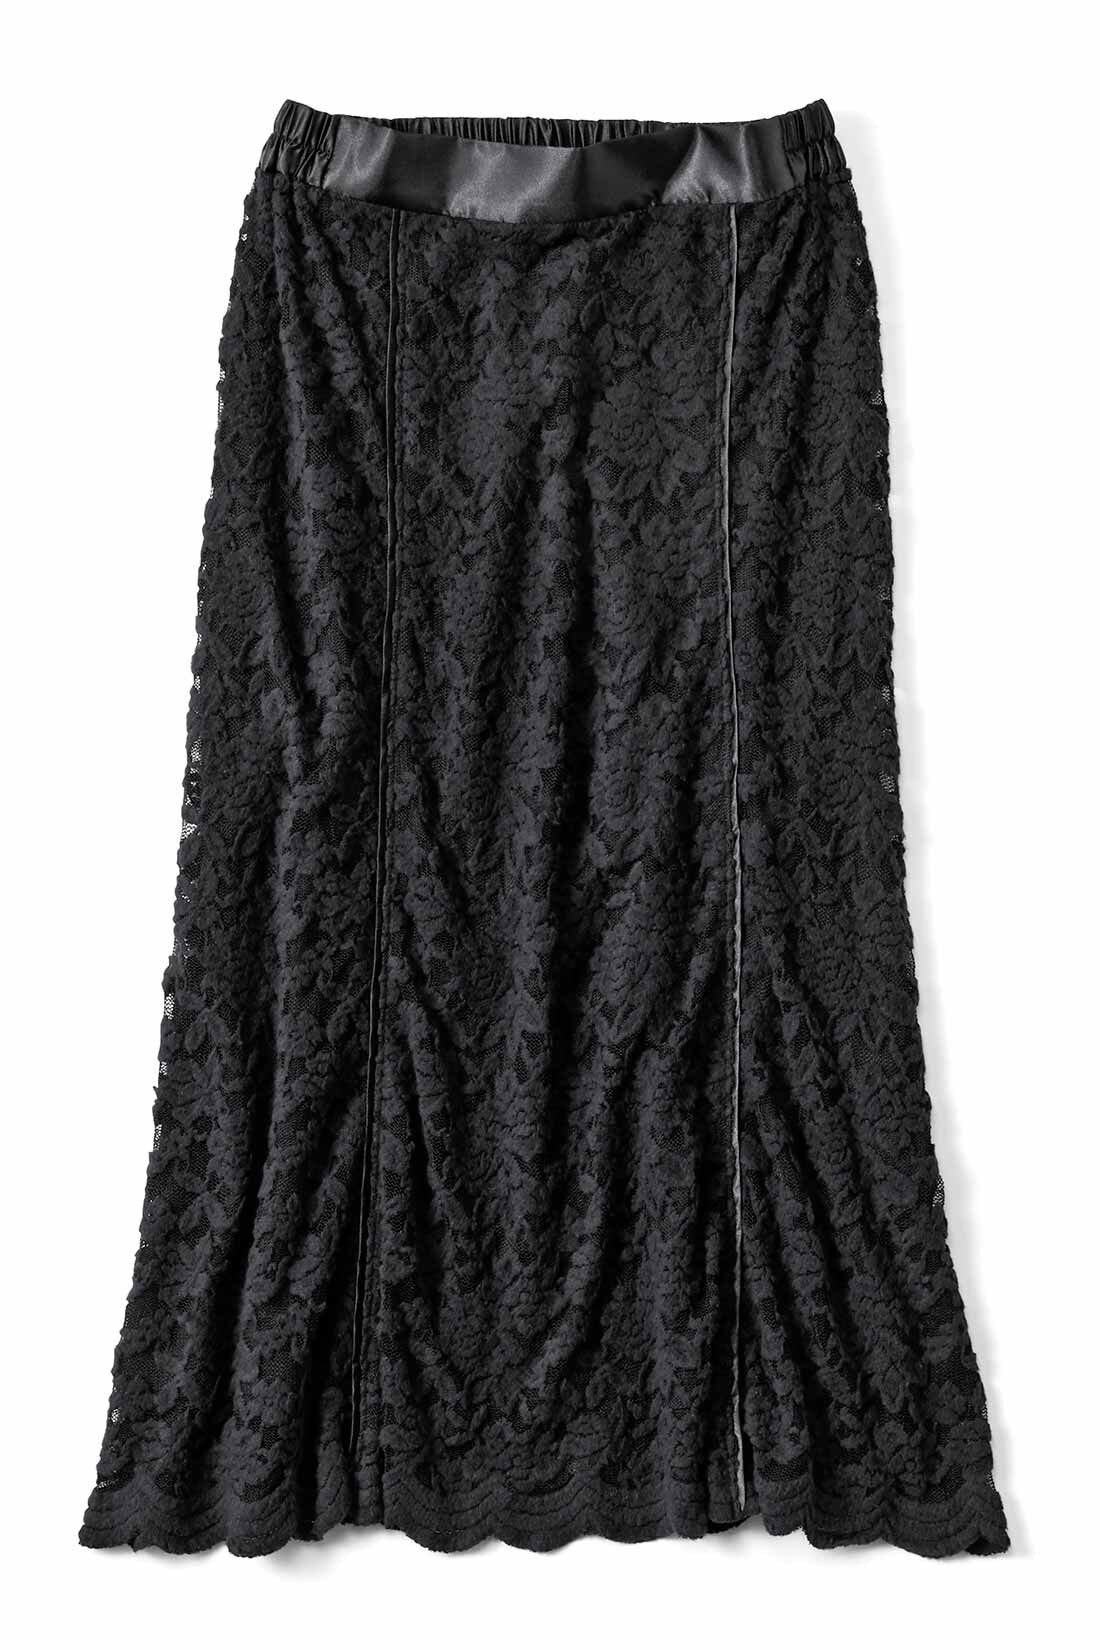 IEDIT|IEDIT[イディット]　帯電防止インナーがうれしい 起毛レーススカート〈ネイビー〉|ブラック サテンテープの切り替えが作るきれいな縦長シルエットが魅力。